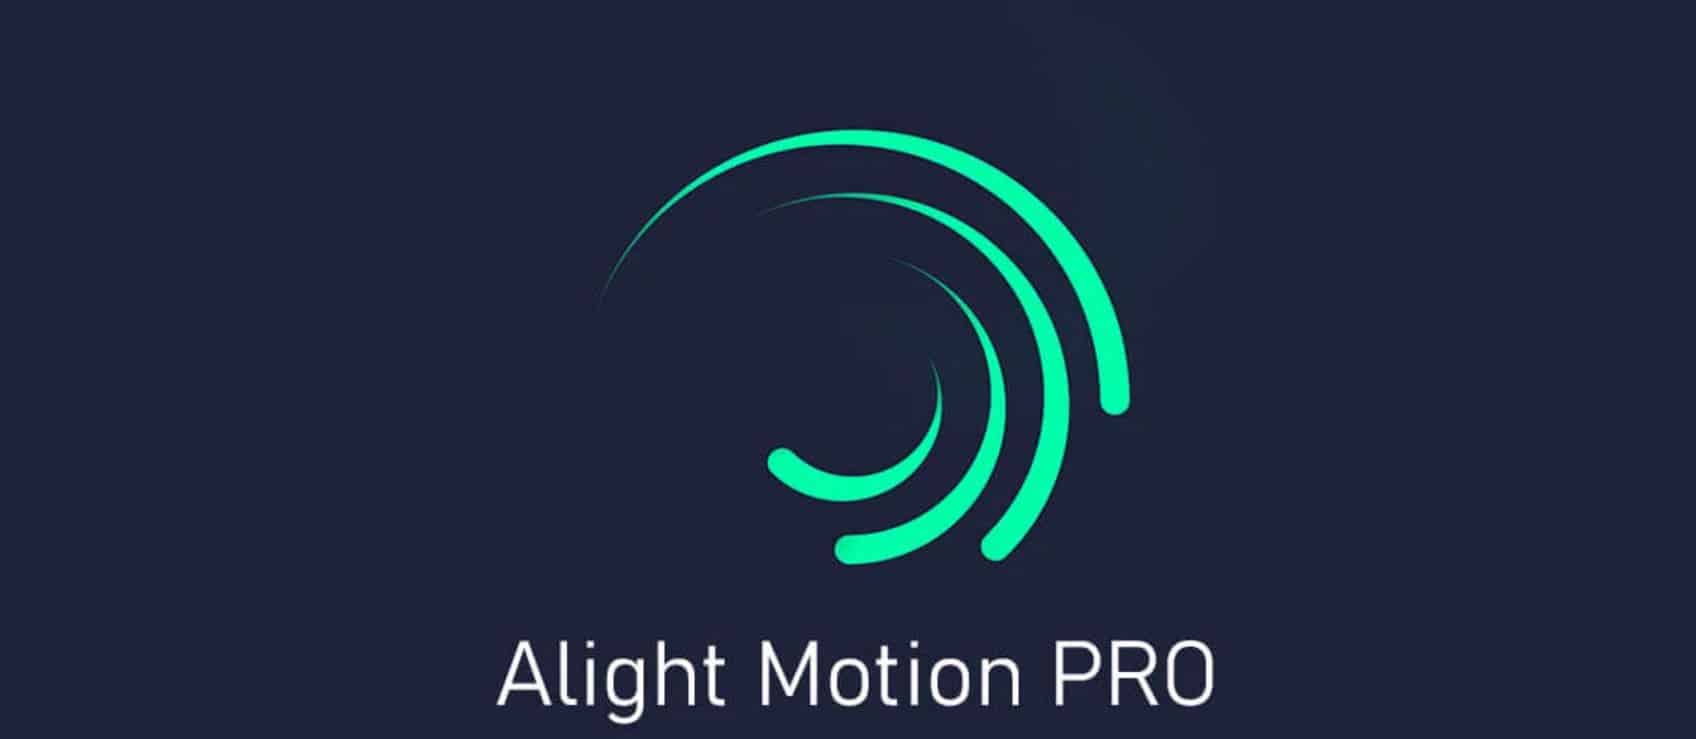 alight-motion-pro-apk